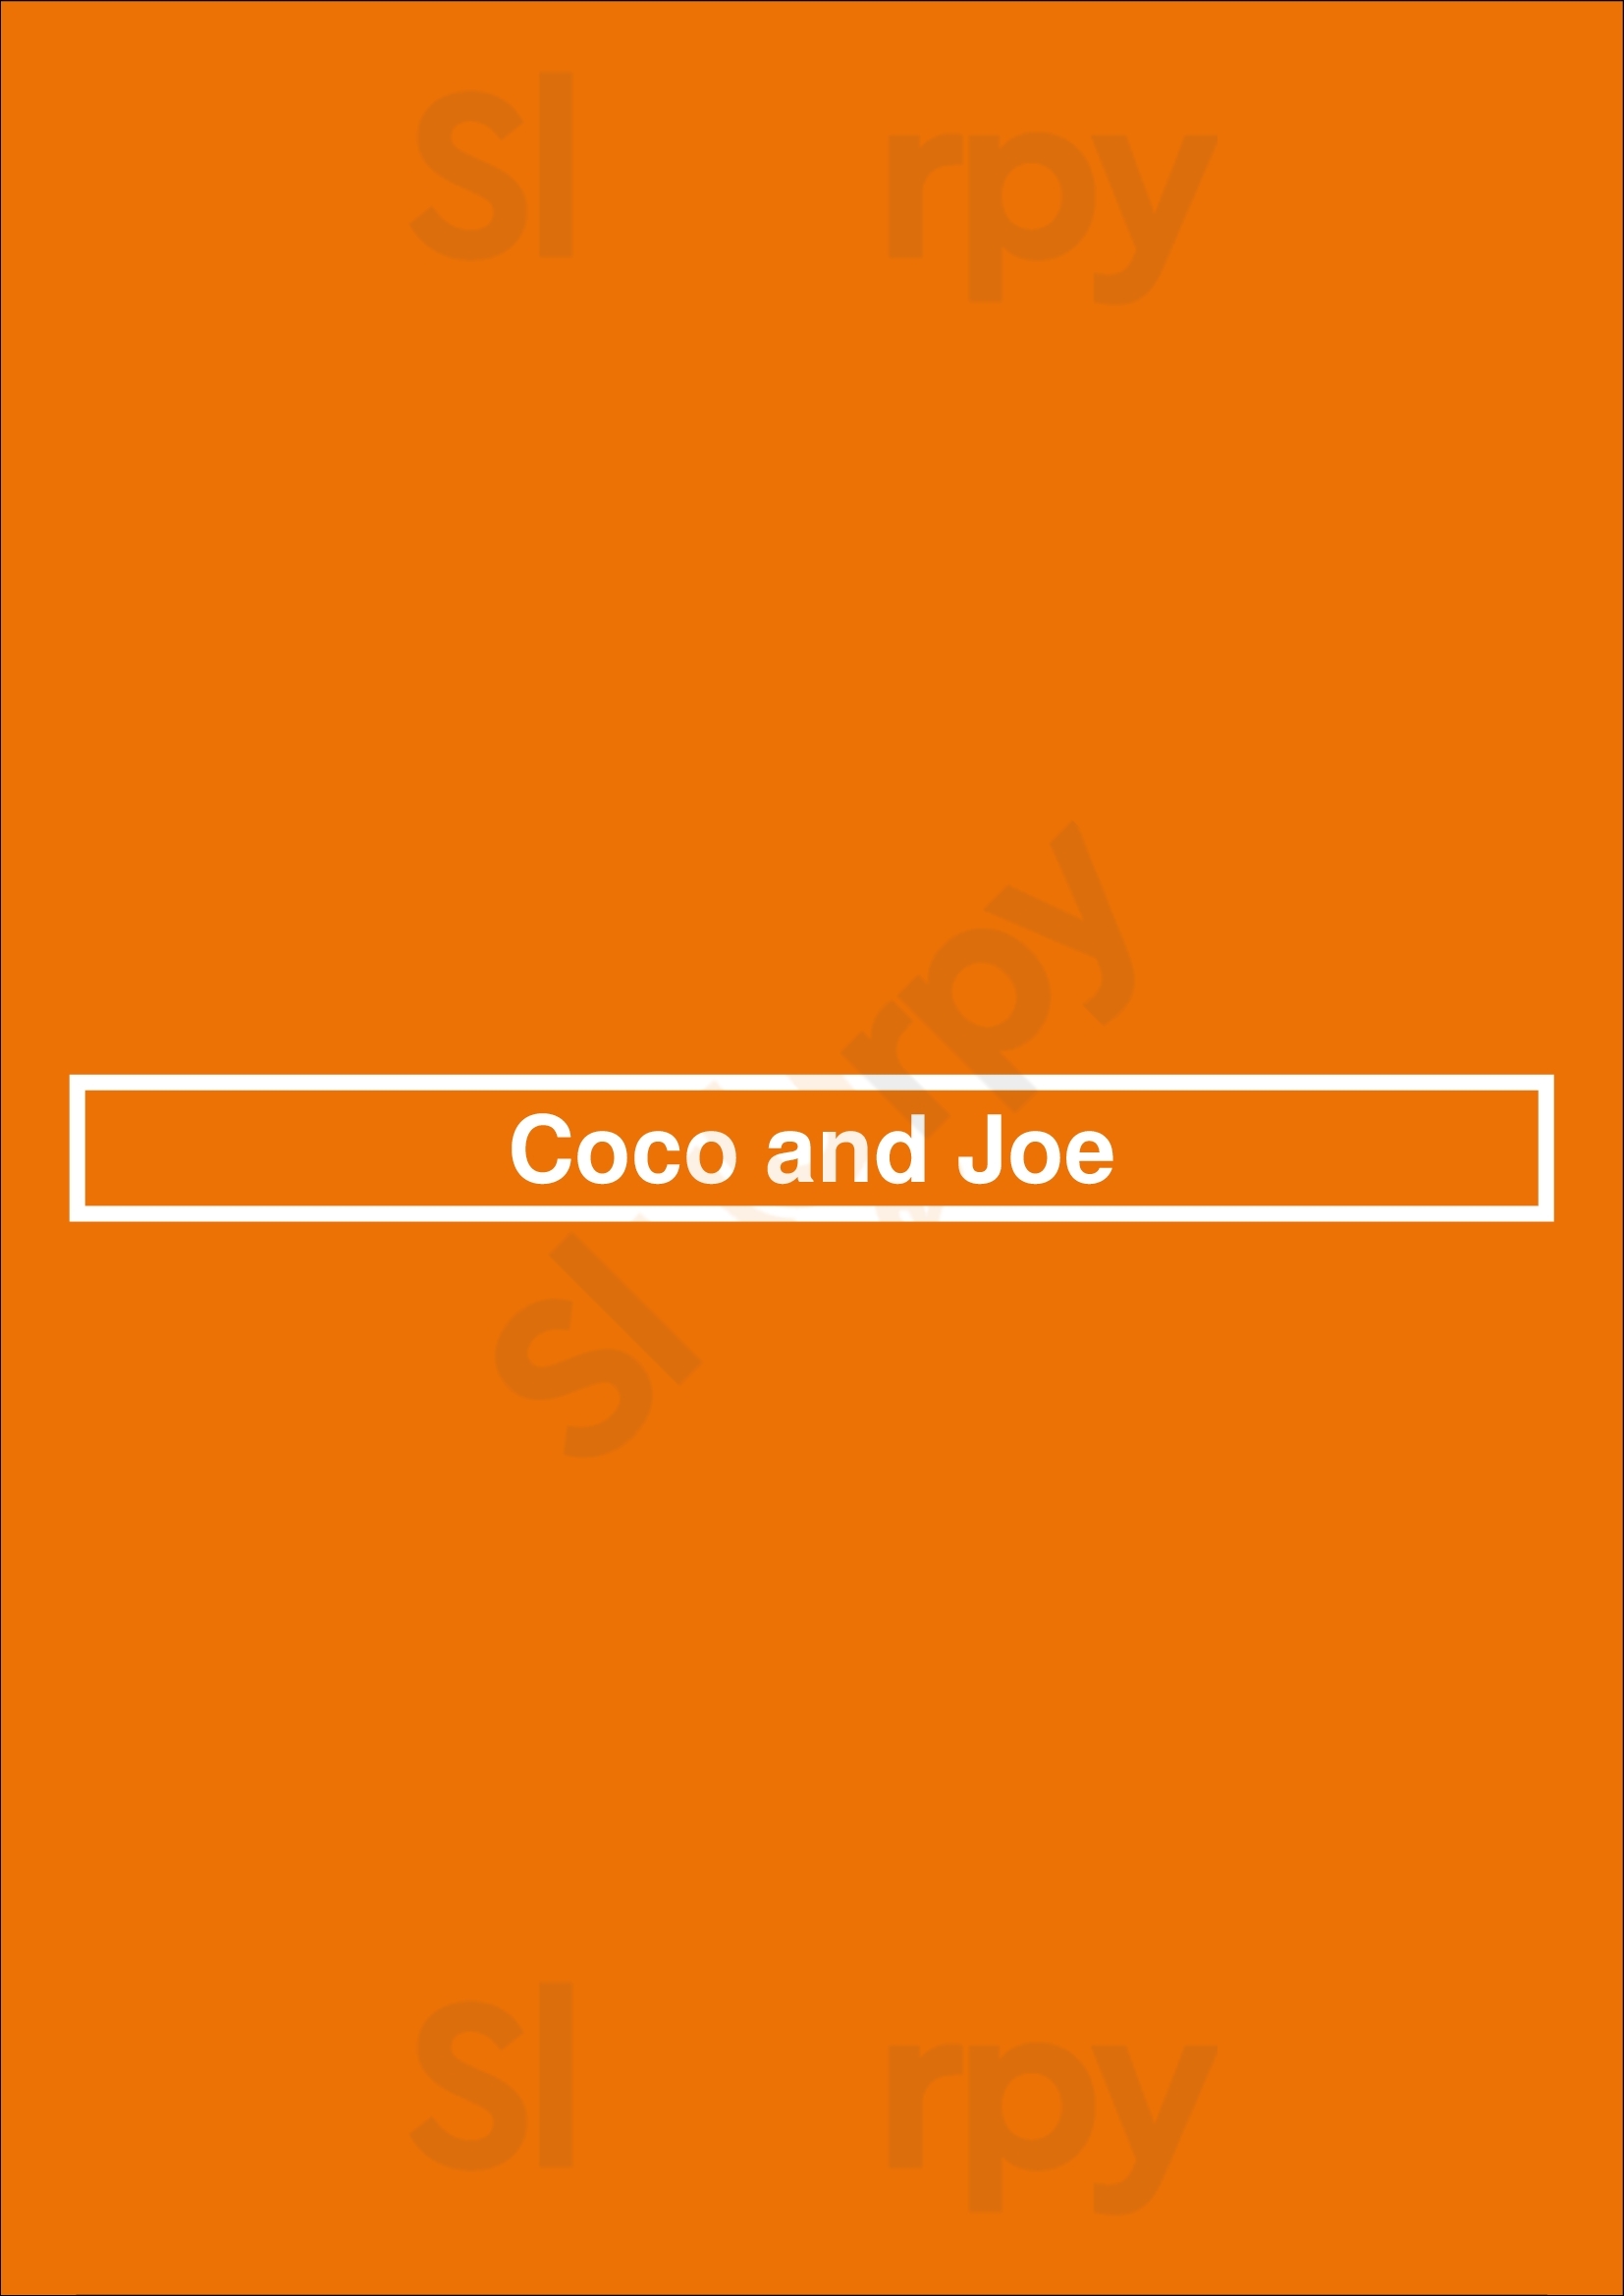 Coco And Joe Melbourne Menu - 1